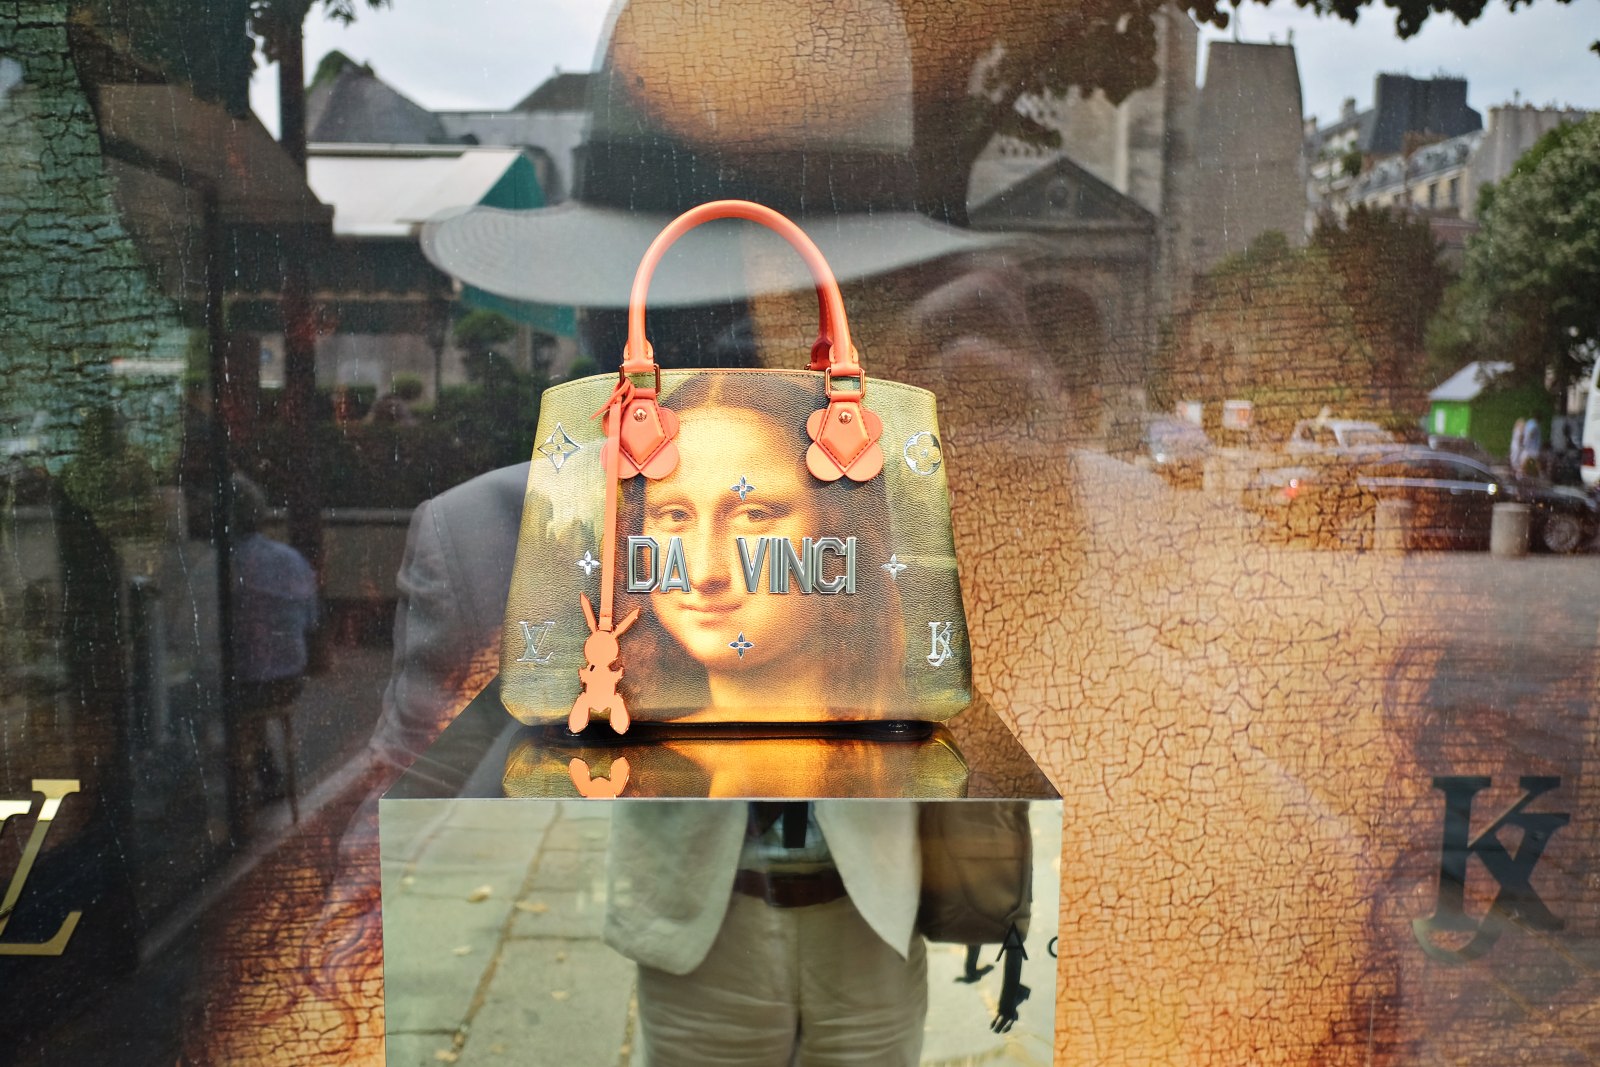 Jeff Koons LV collab - Da Vinci handbag and reflection; Boulevard Saint-Germain, Paris. Street style travel photography by Kent Johnson.